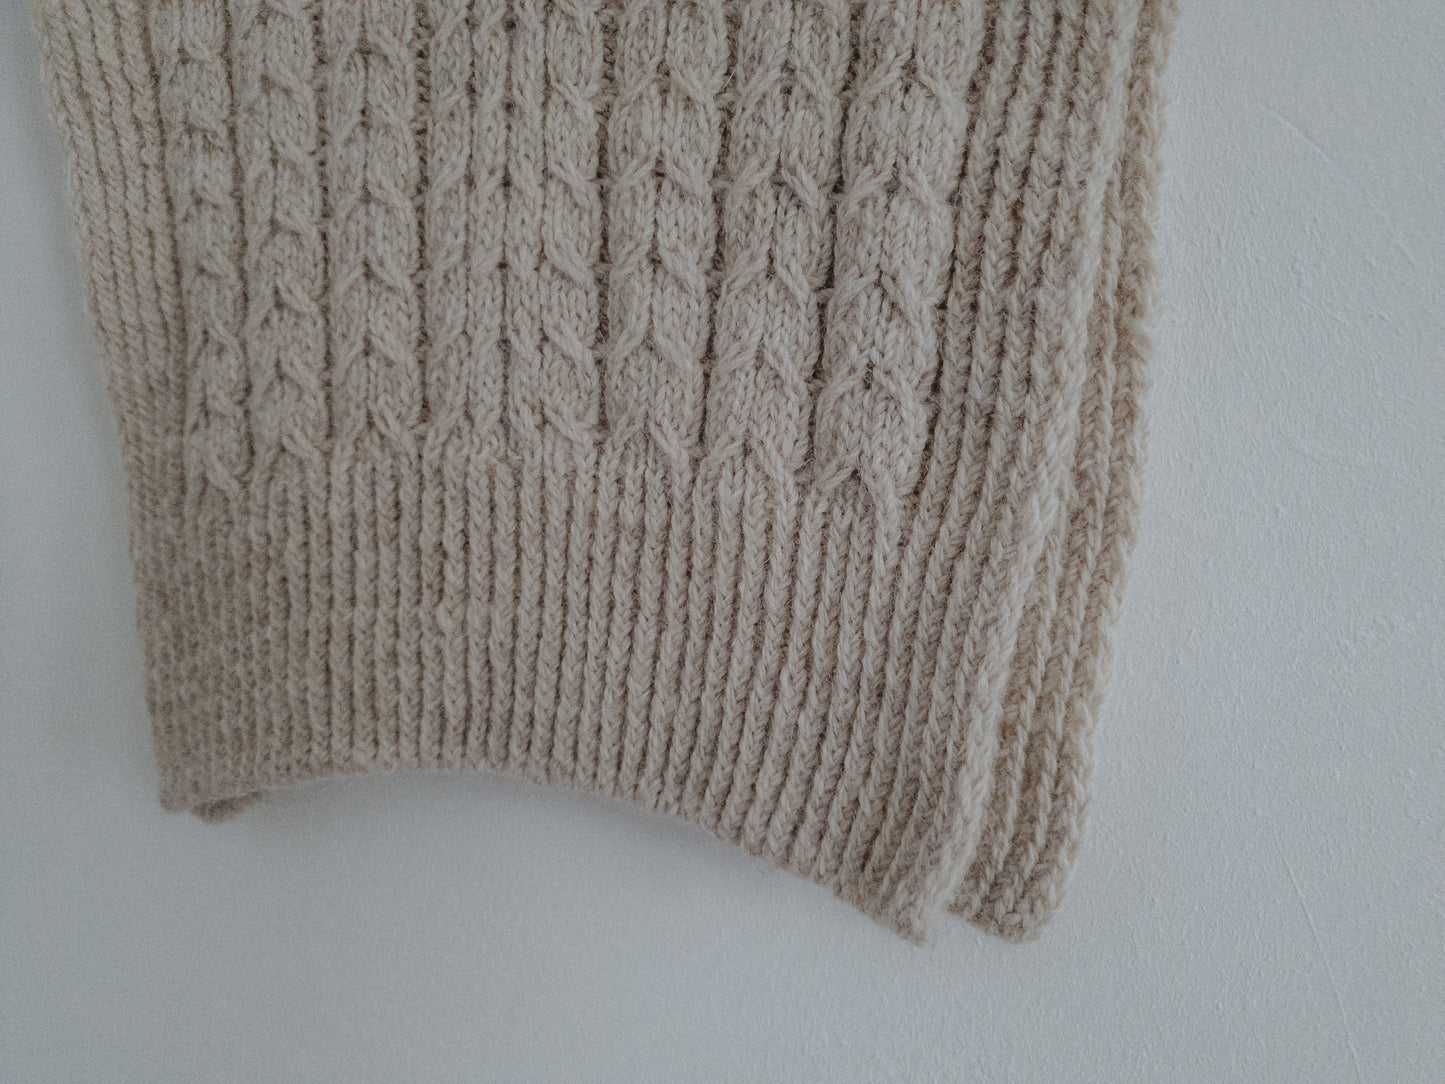 Imagine Spring Cowl - Knitting Pattern